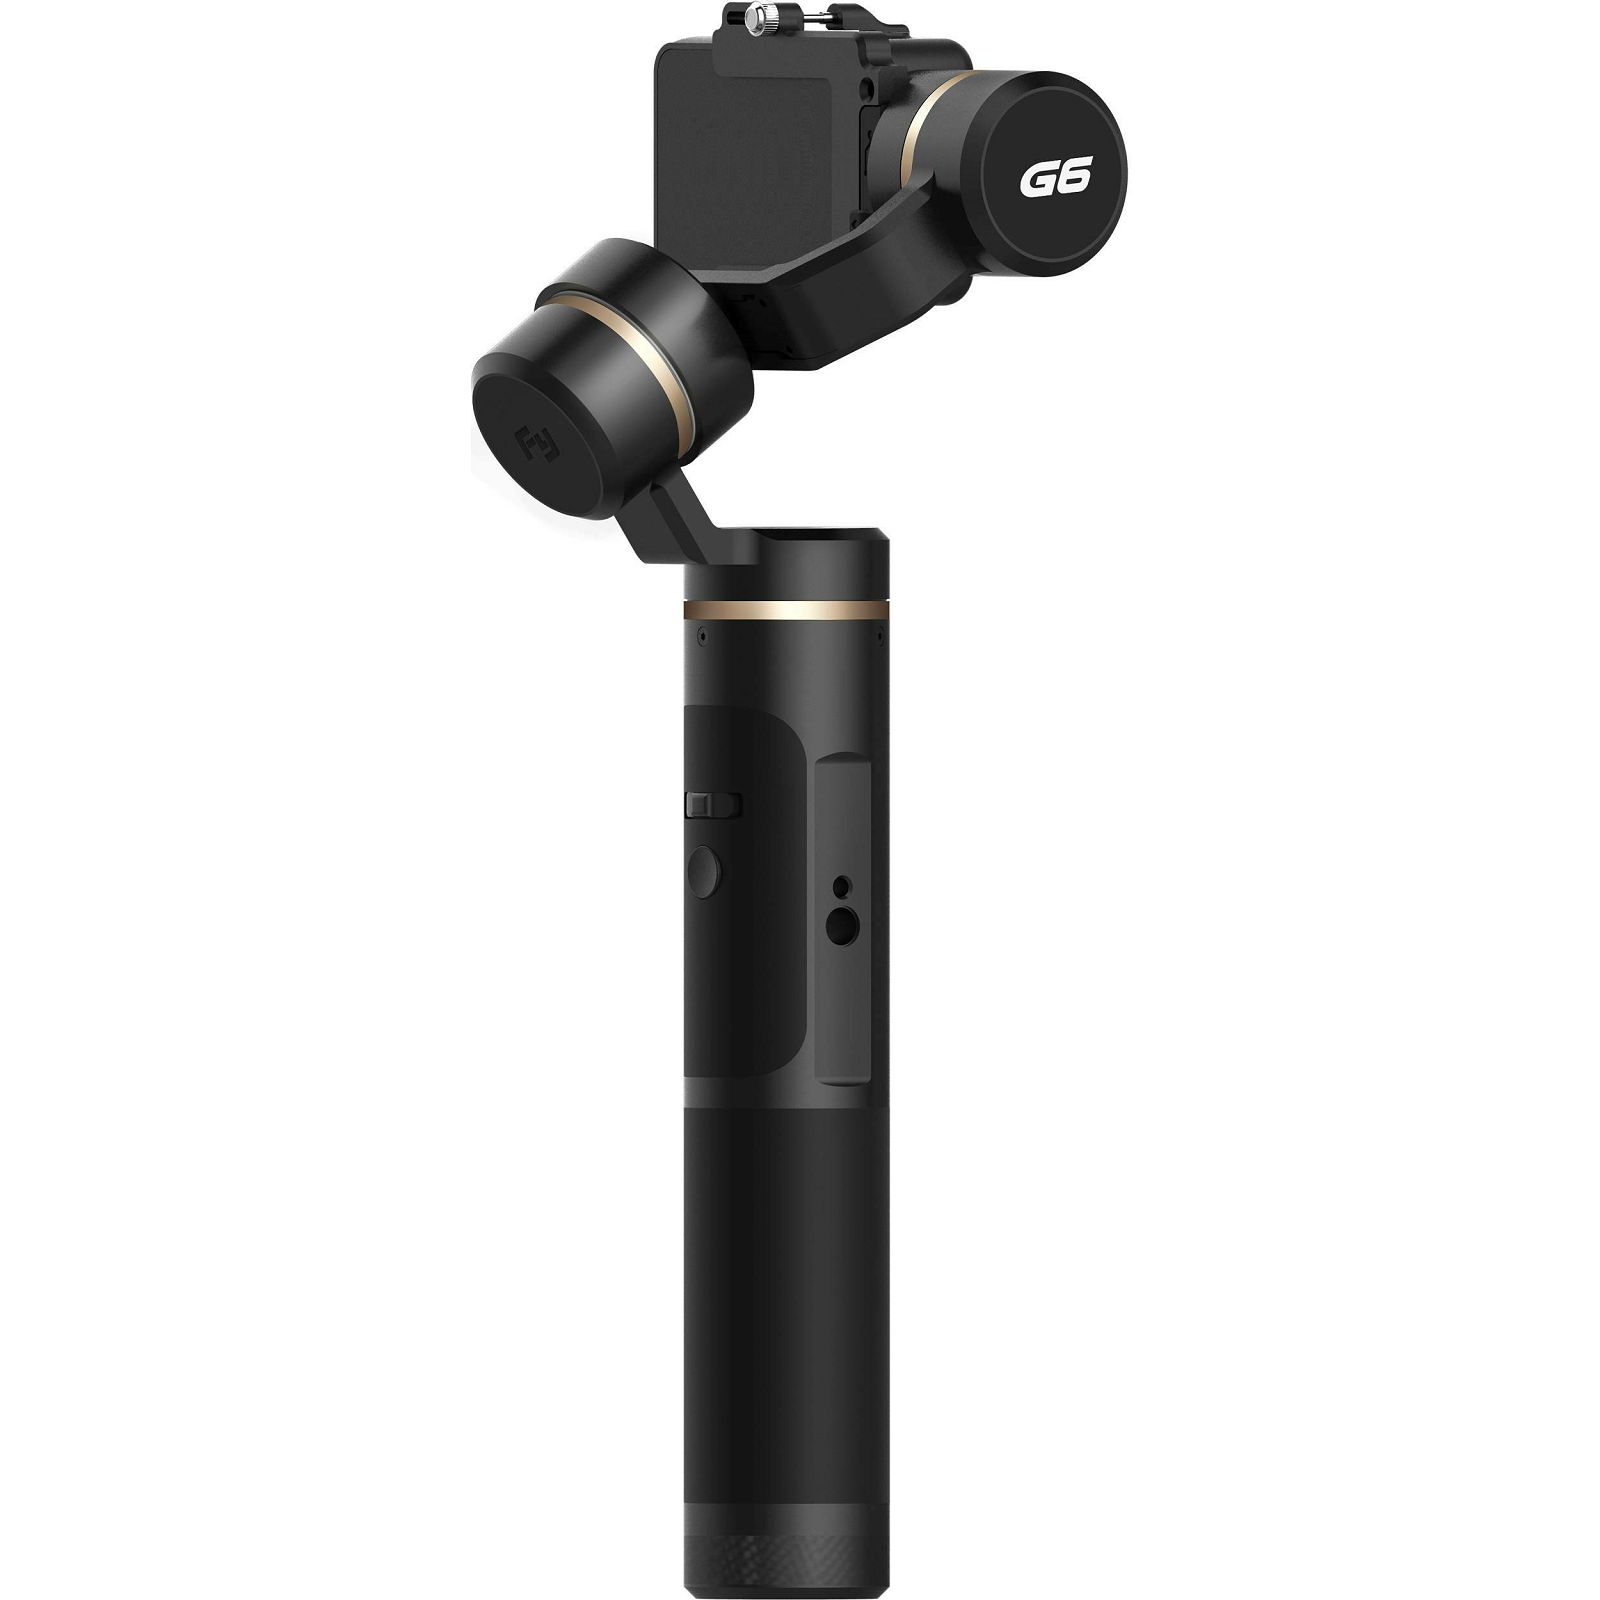 FeiyuTech G6 3-axis Handheld gimbal stabilizer for Action cam GoPro HERO6, HERO5, HERO4, HERO3+, HERO3, Yi cam 4K, AEE 3-osni stabilizator za video snimanje